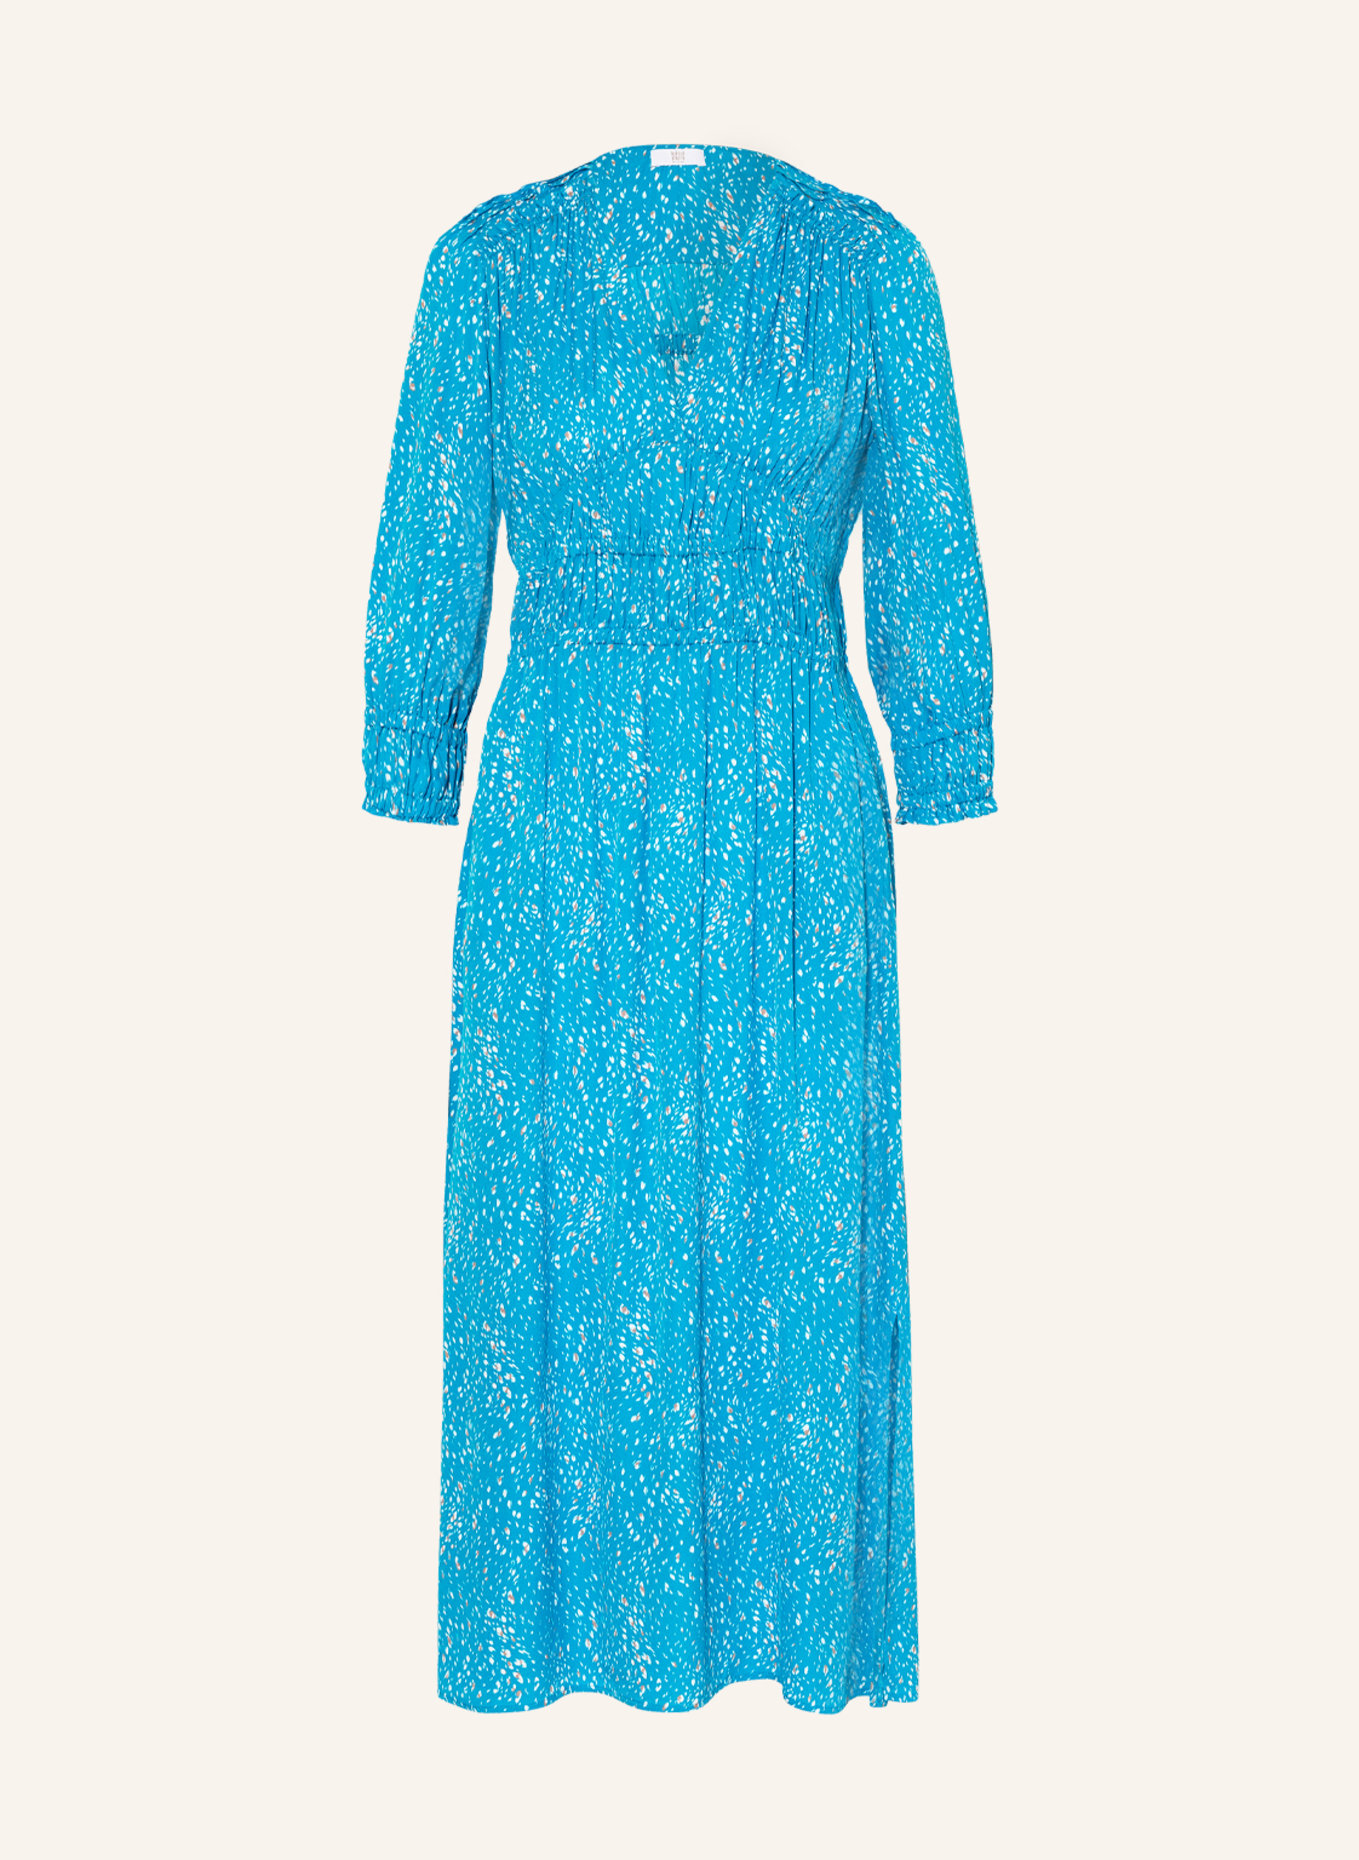 RIANI Kleid, Farbe: BLAU (Bild 1)